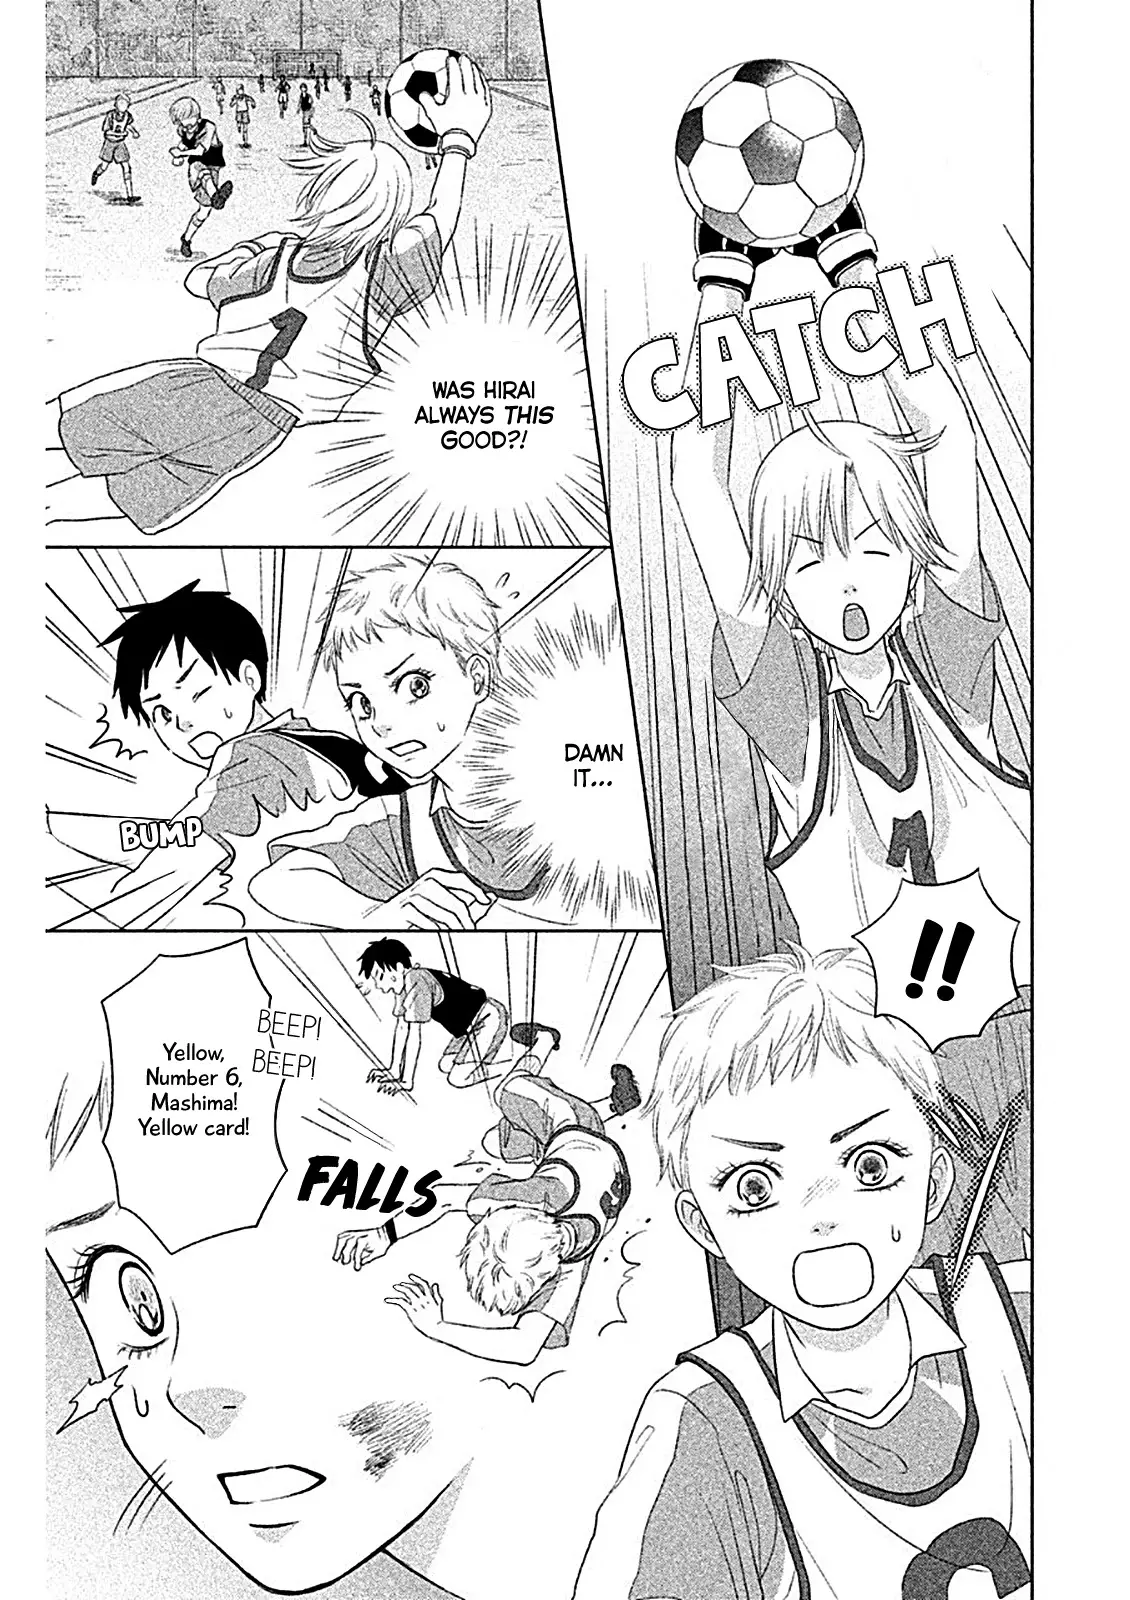 Chihayafuru: Middle School Arc - 3 page 20